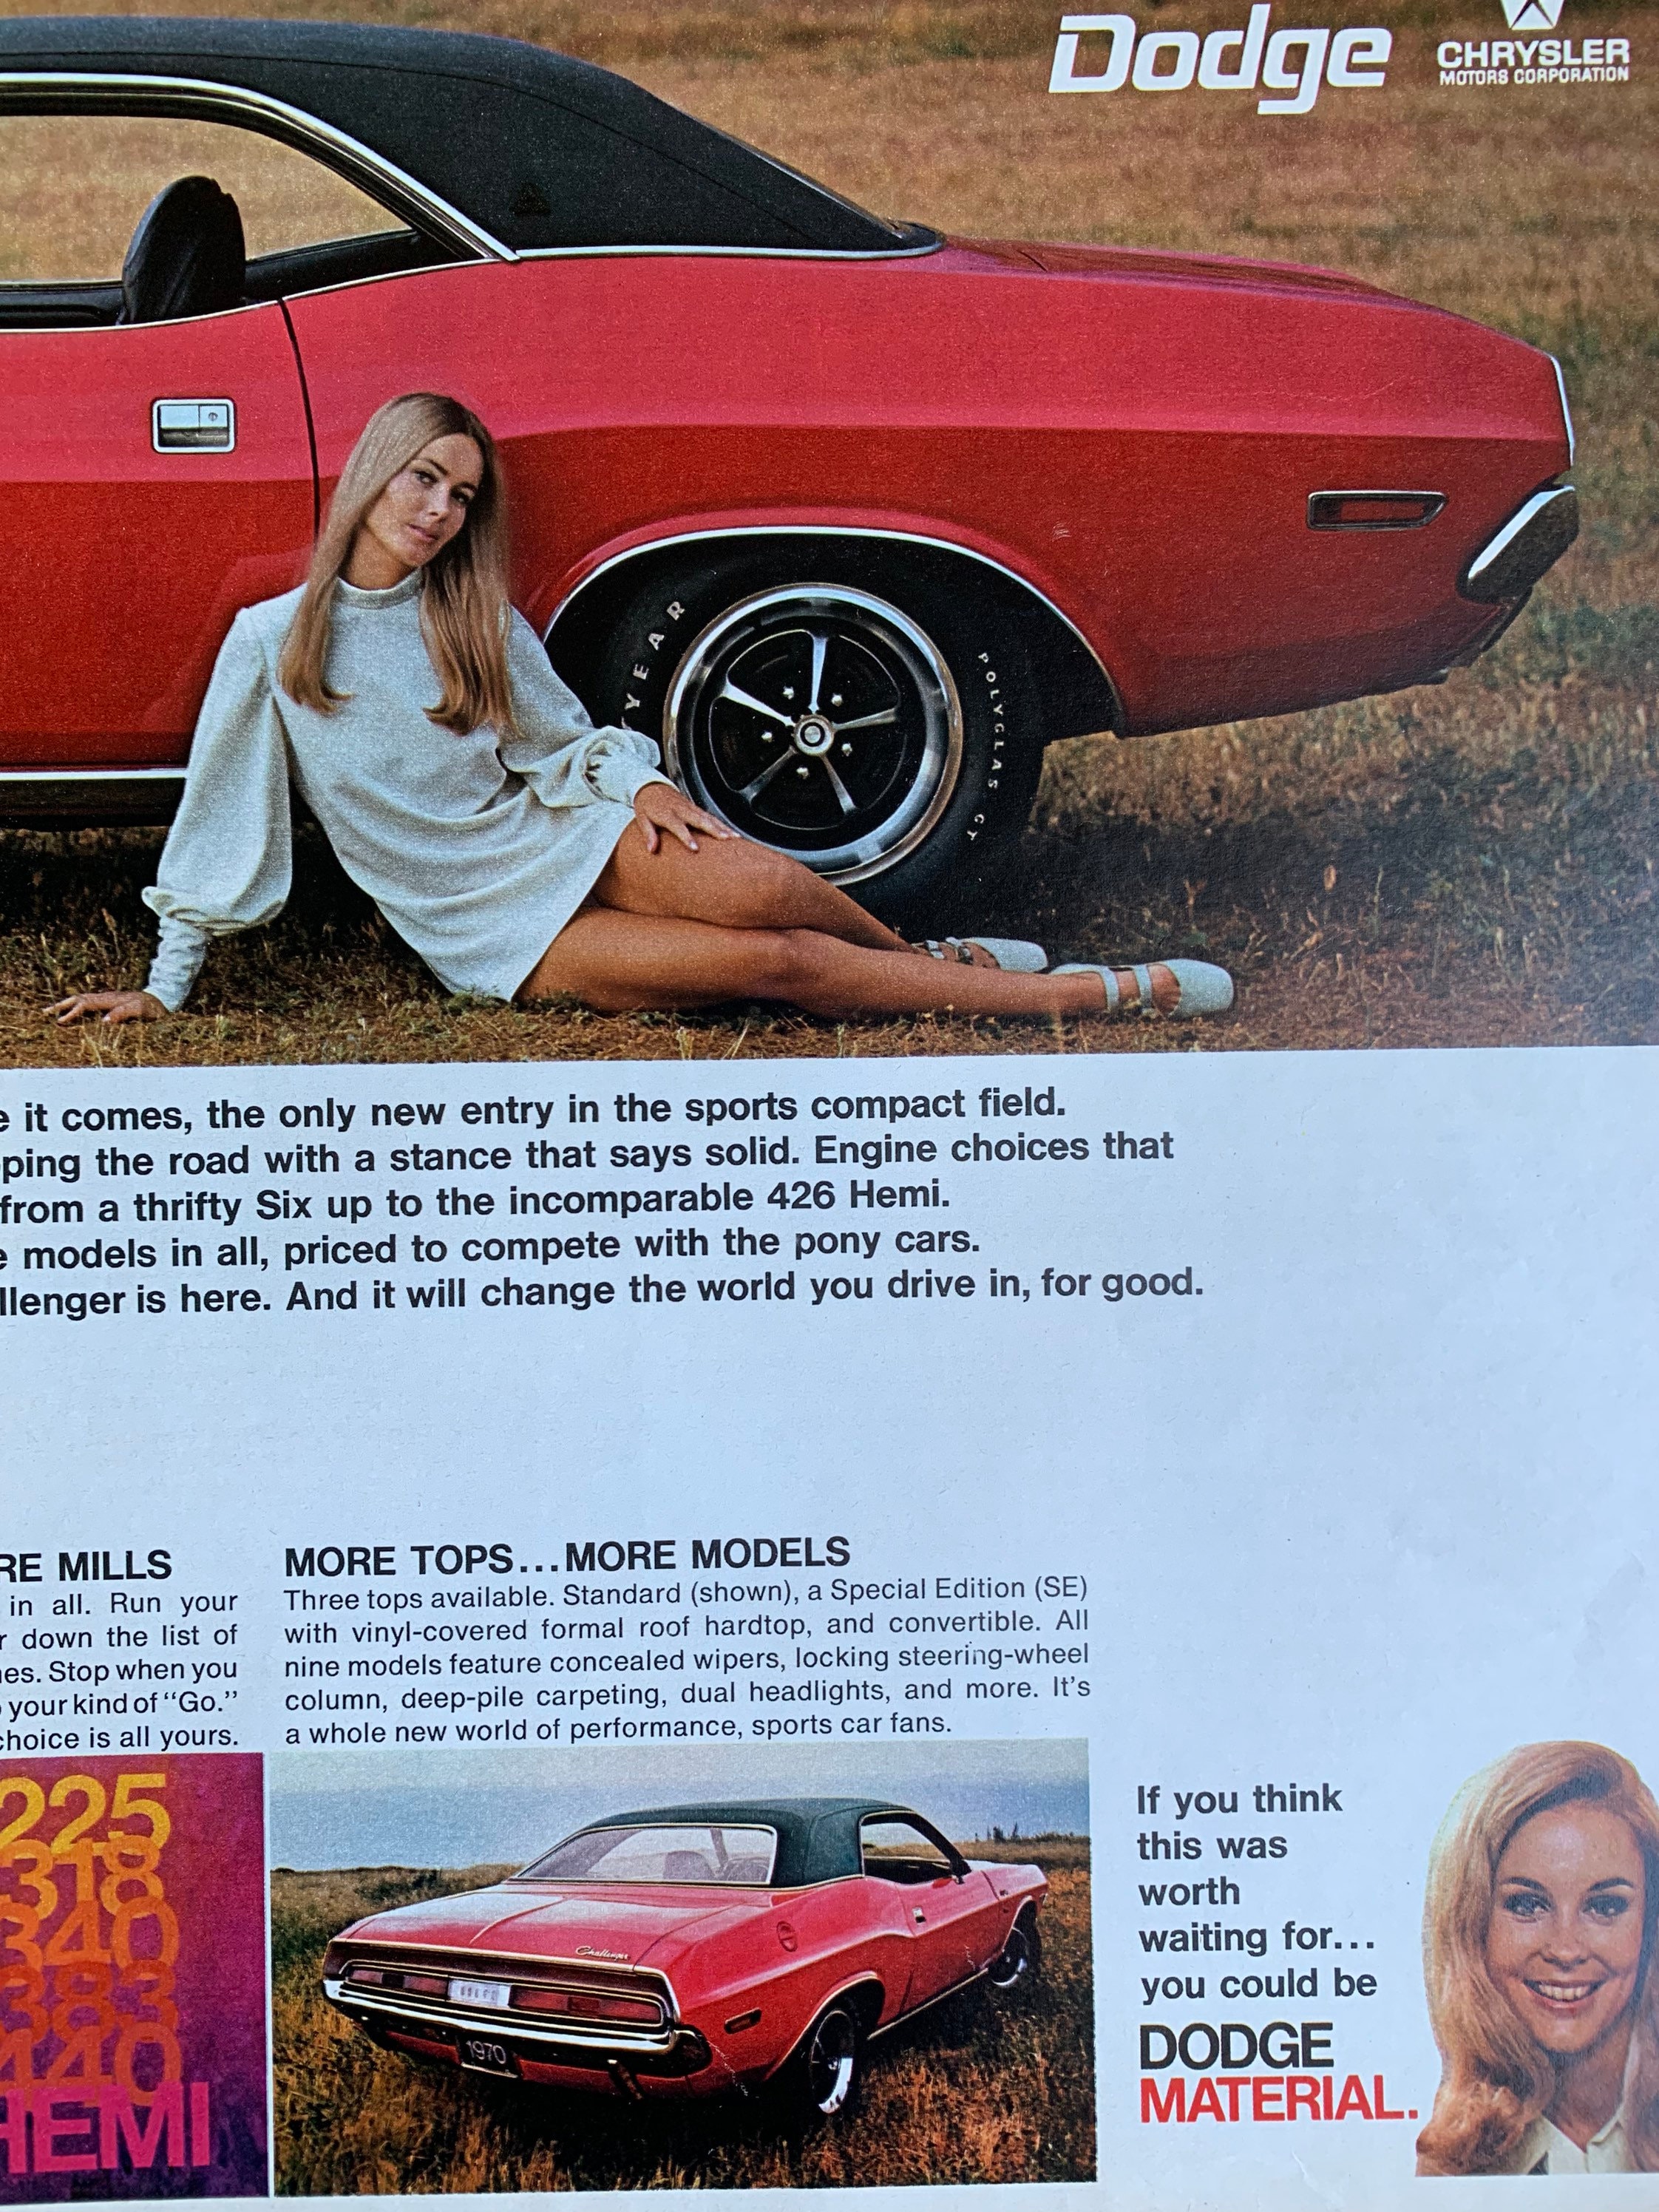 1970 Dodge Challenger Promotional Advertising Poster 